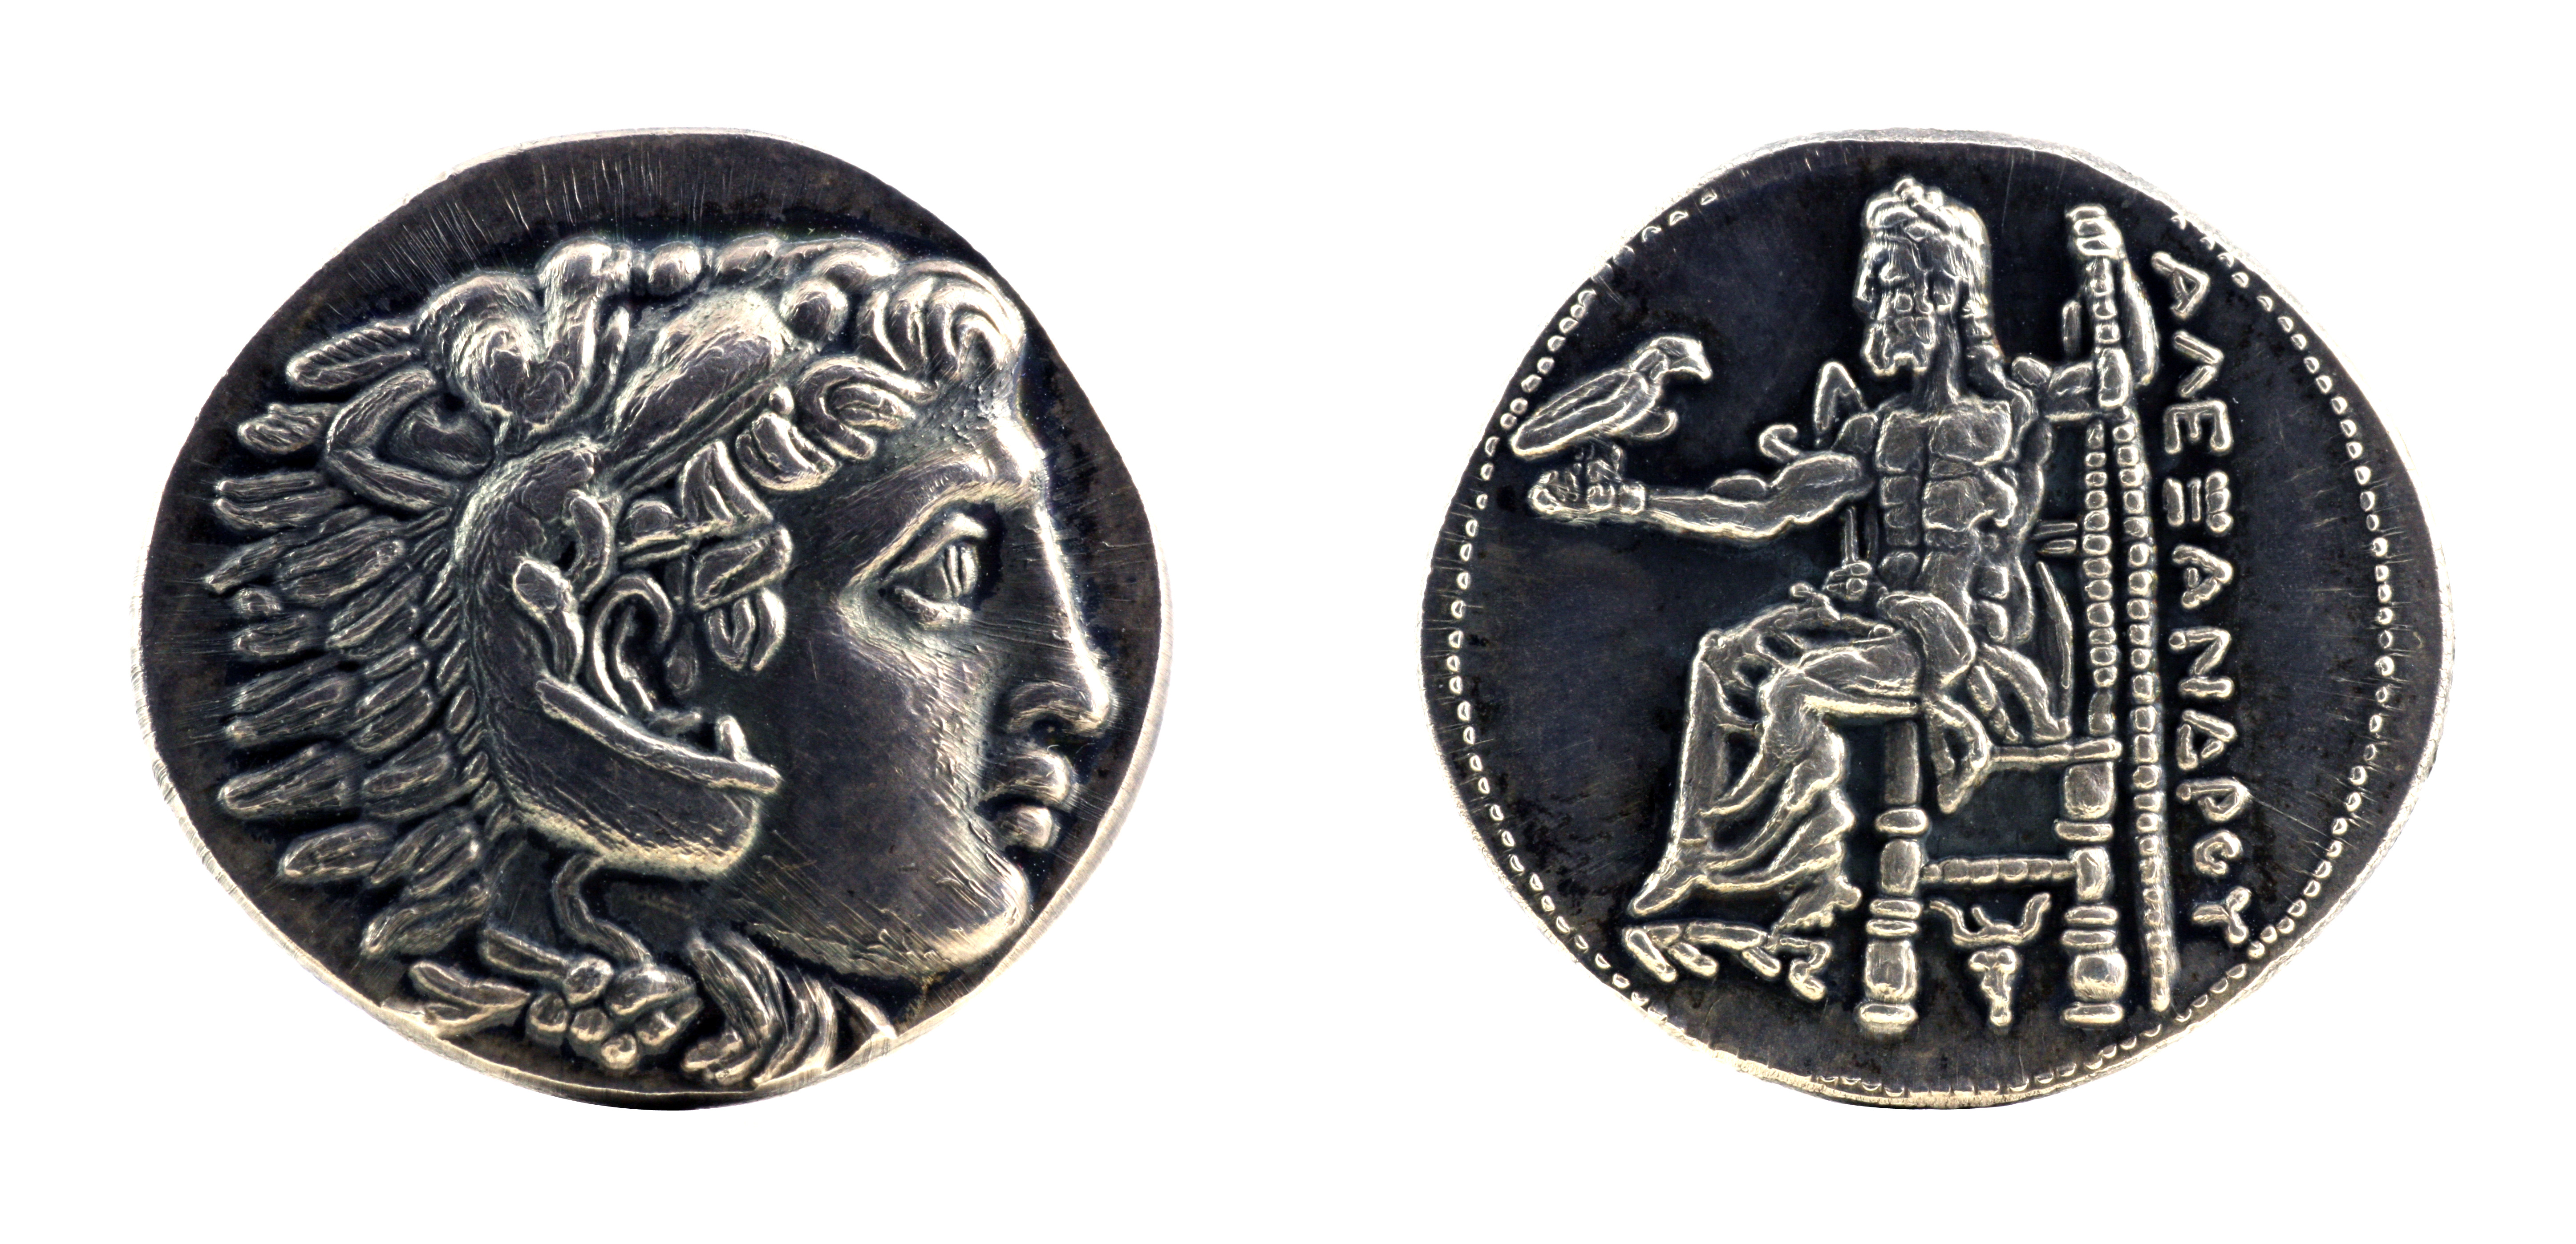 Tetradrachm from Alexander the Great. Image courtesy Adobe Stock.